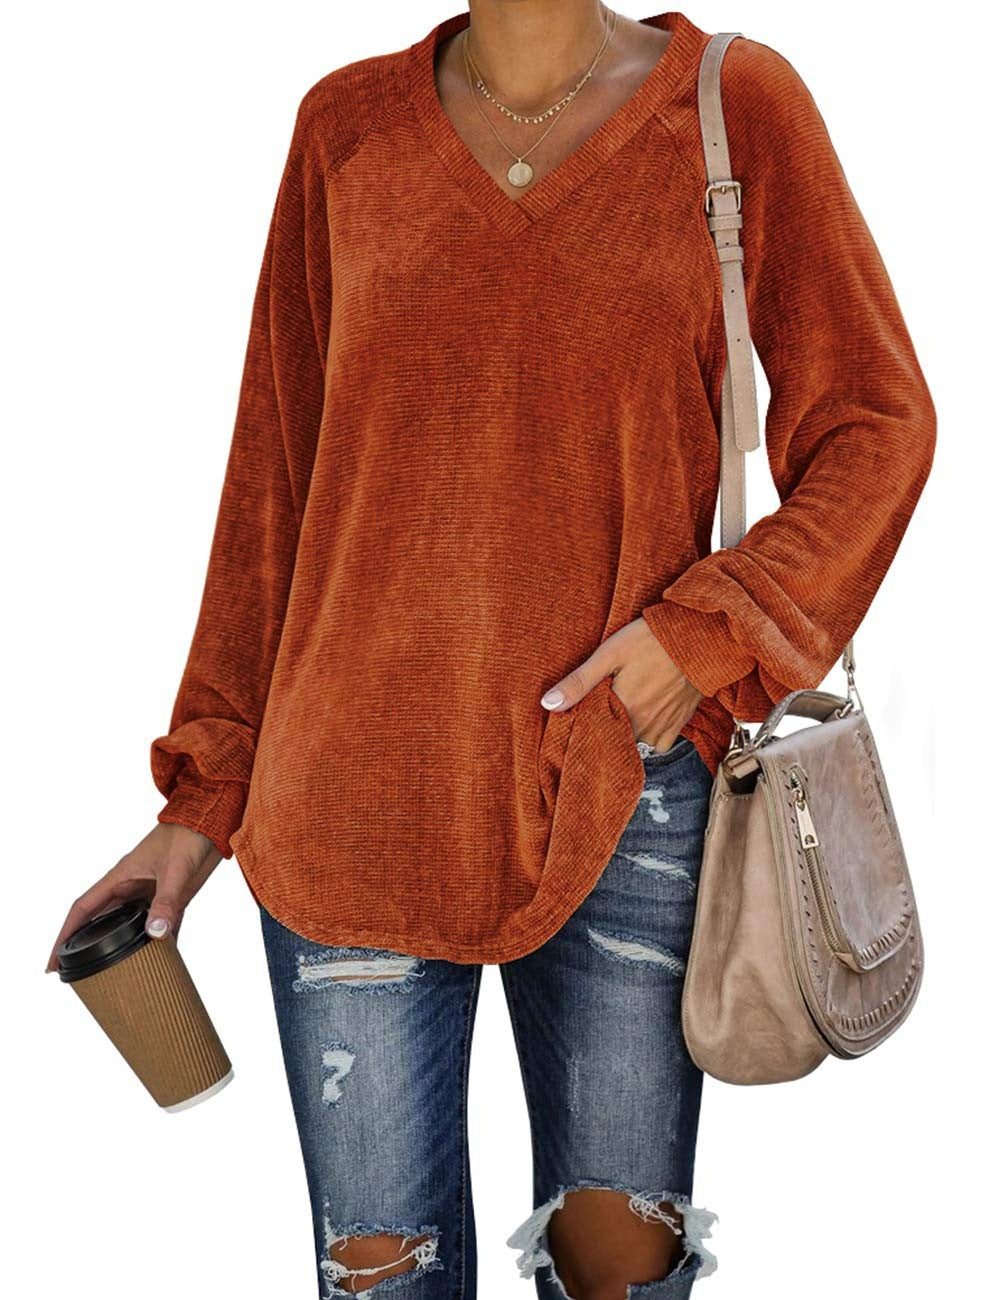 Tshirt  | Plus size women’s V-neck long sleeves T-shirt | Rust red |  3XL| thecurvestory.myshopify.com